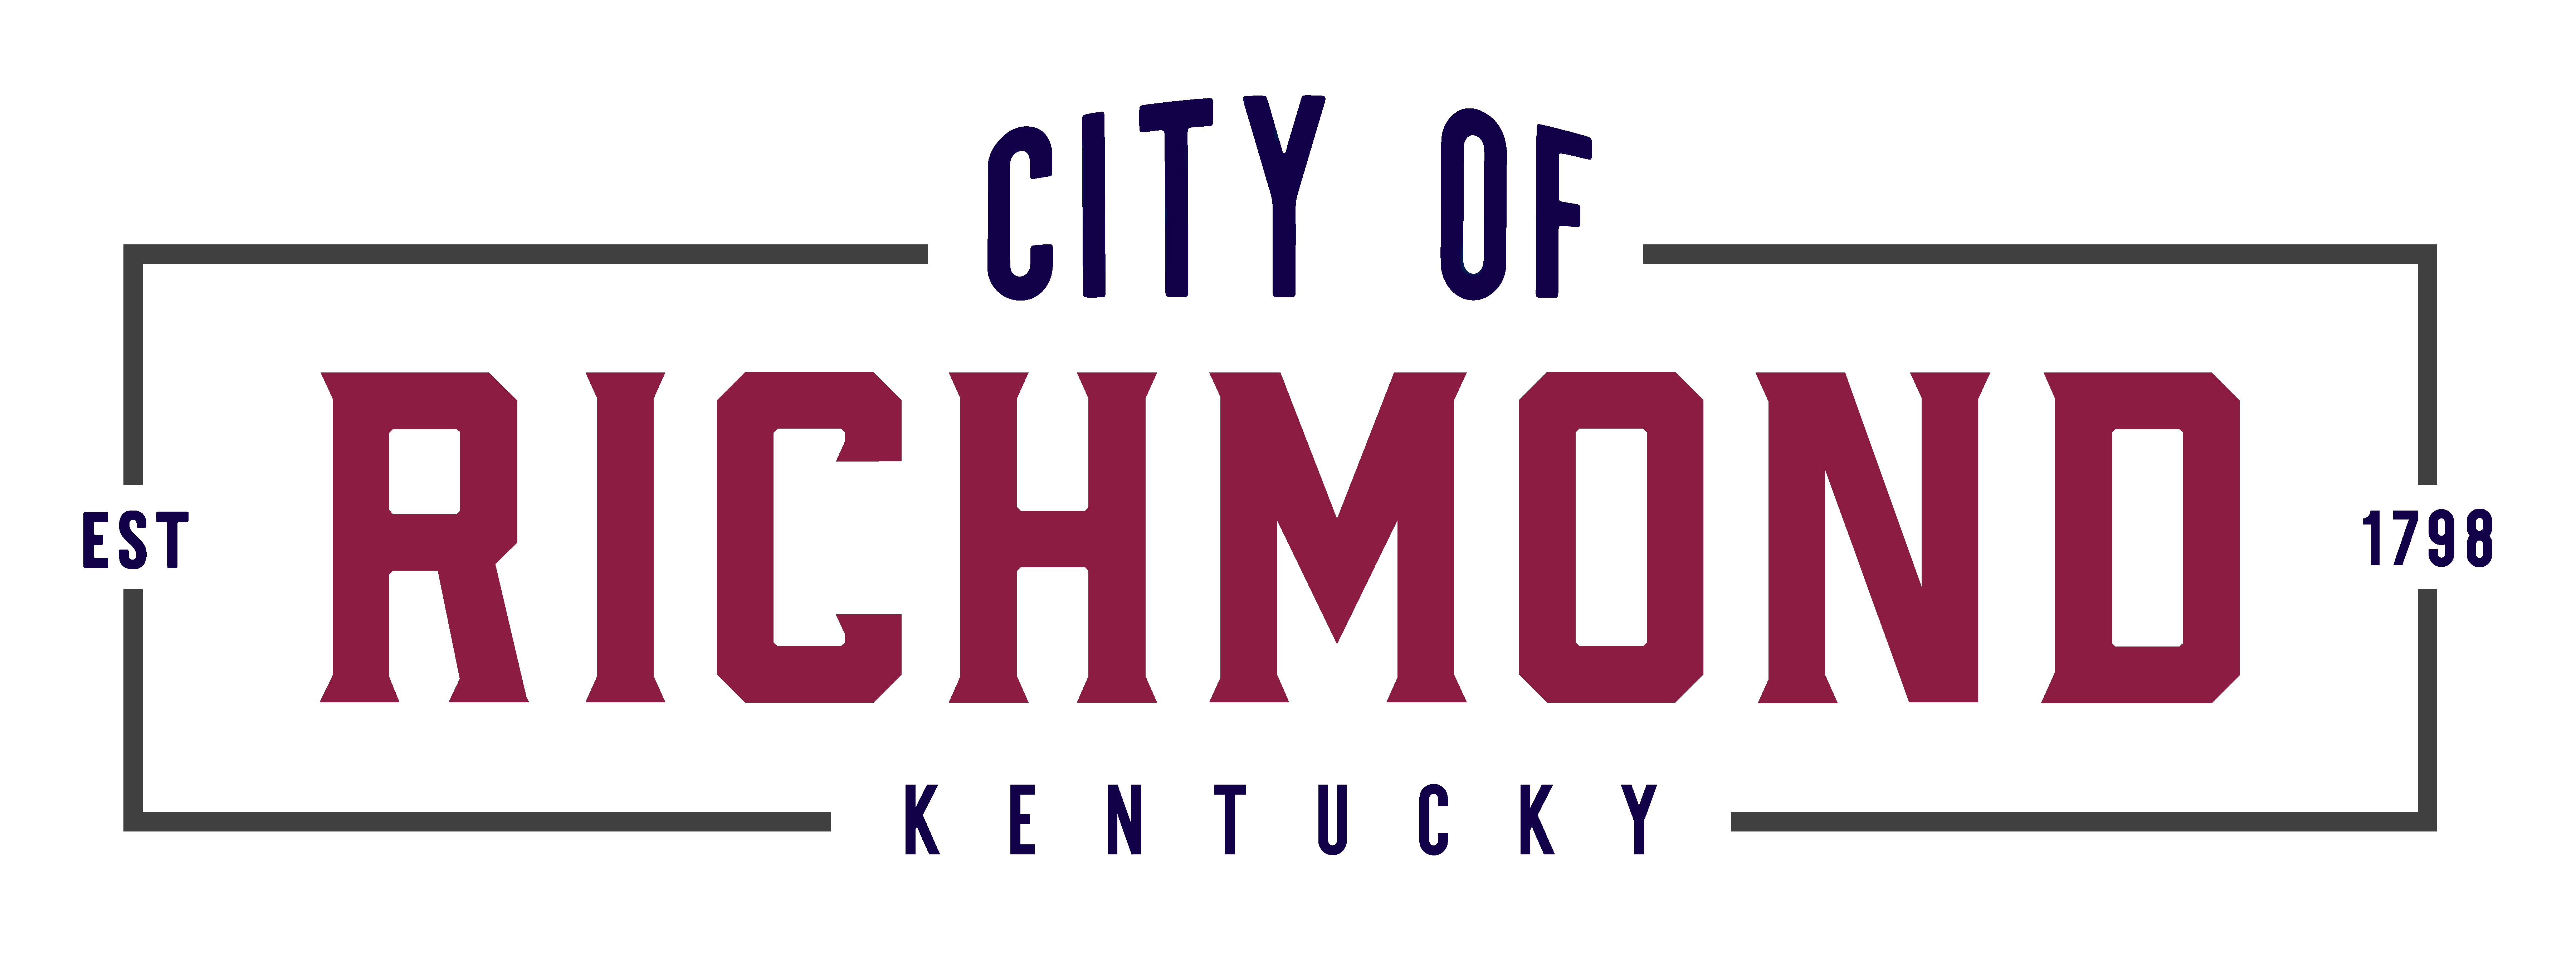 City of Richmond Logo - White